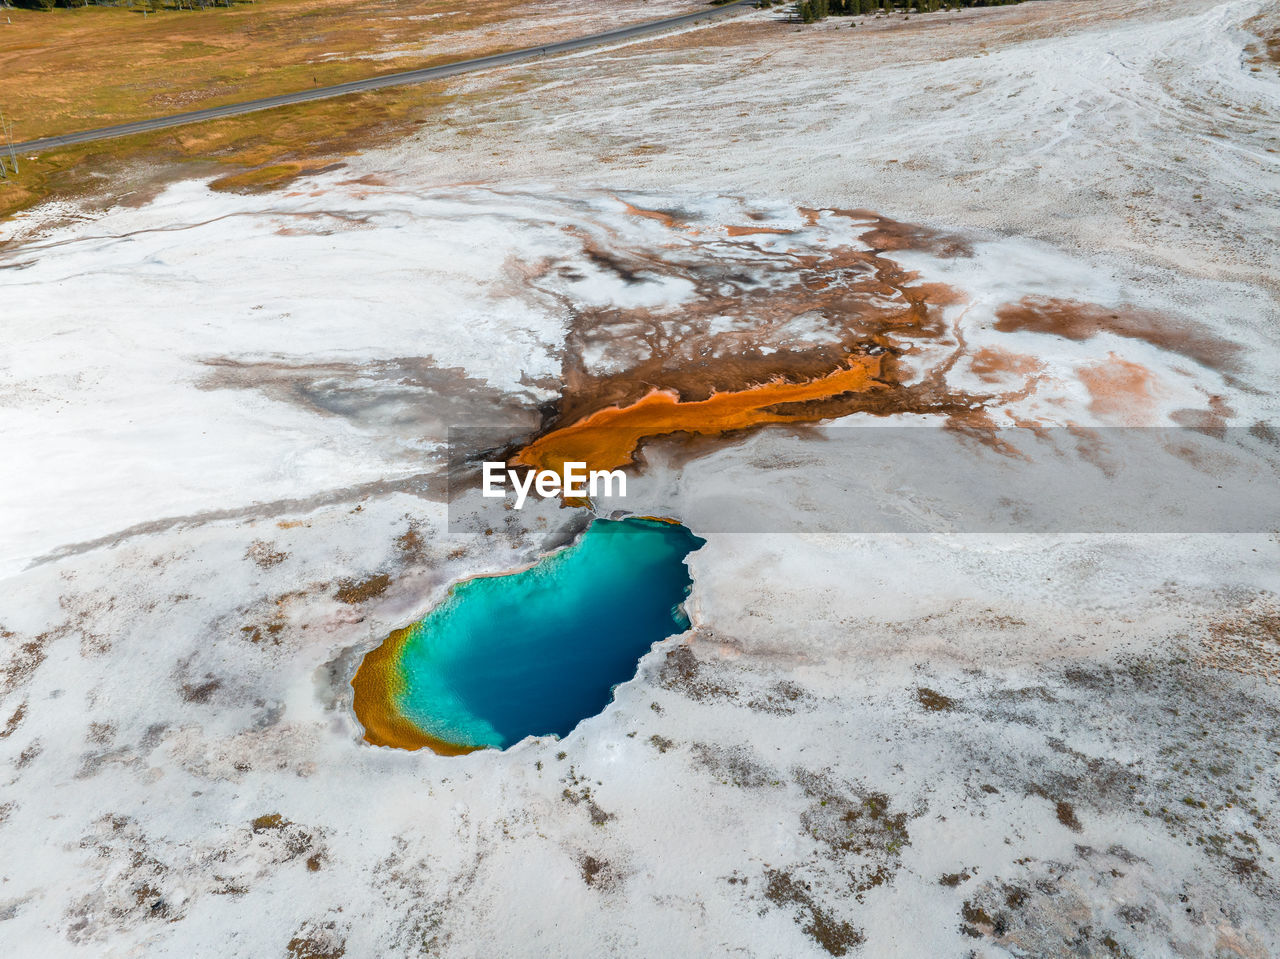 Upper geyser basin of yellowstone national park, wyoming, united states